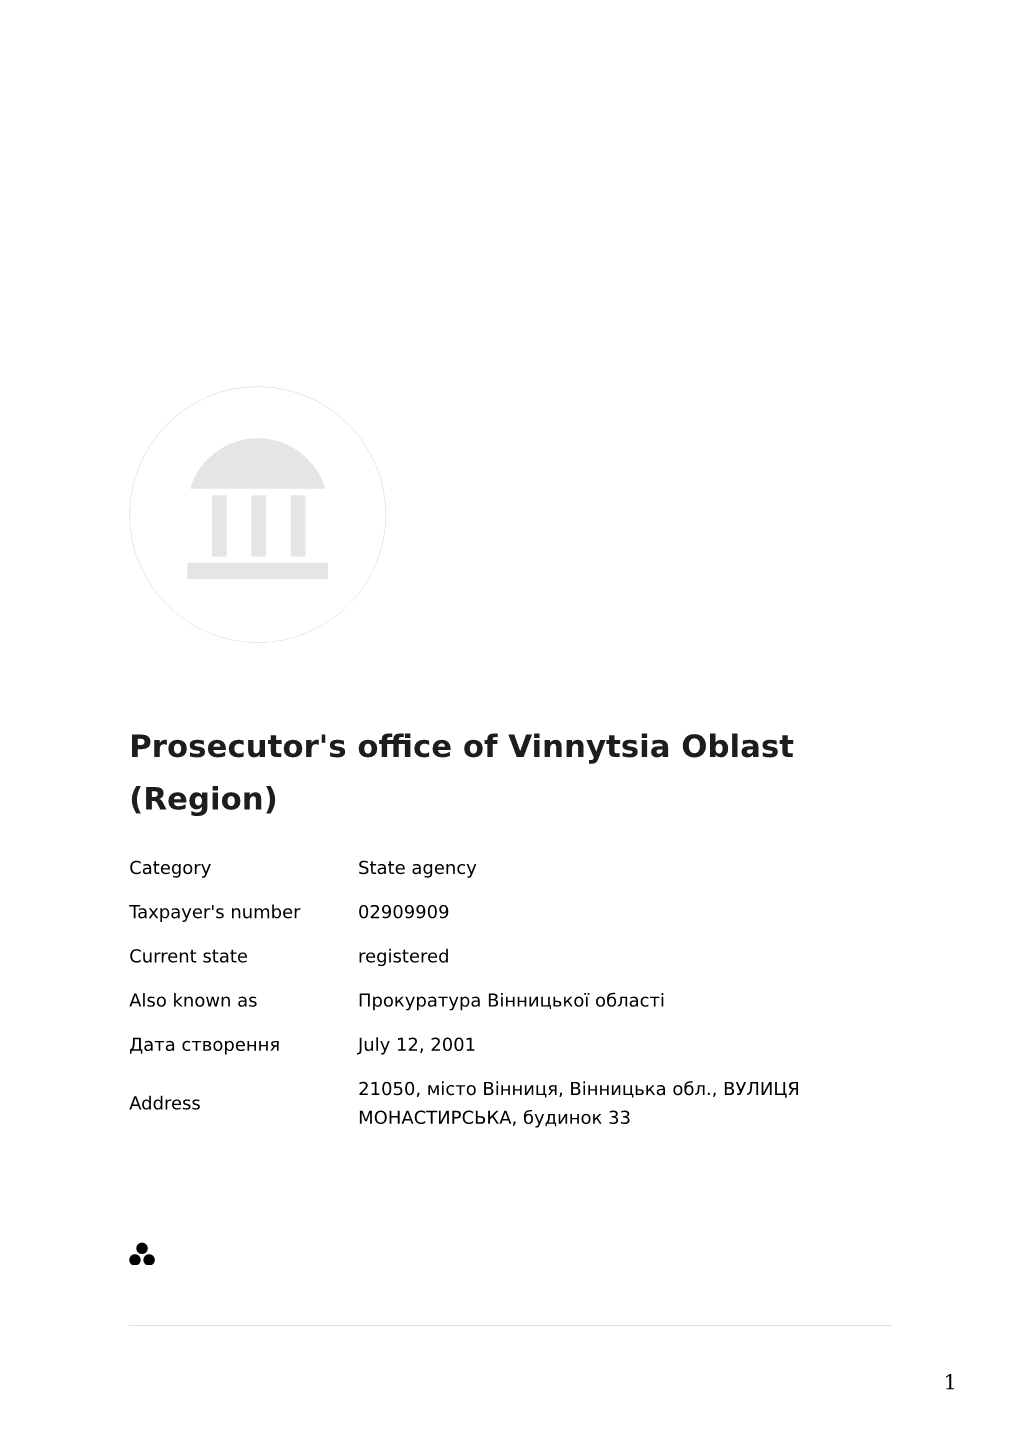 PEP: Prosecutor's Office of Vinnytsia Oblast (Region) (02909909)